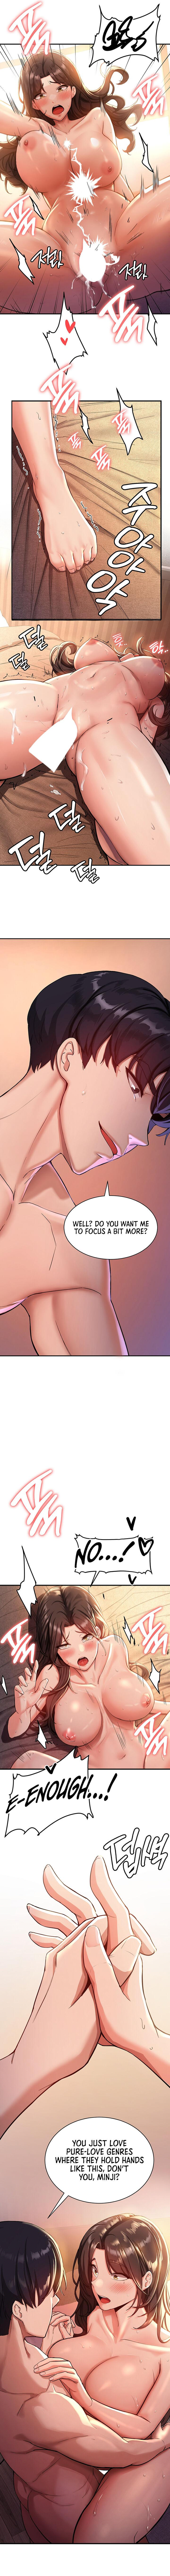 Nudist Your Girlfriend Was Amazing Freeporn - Page 5